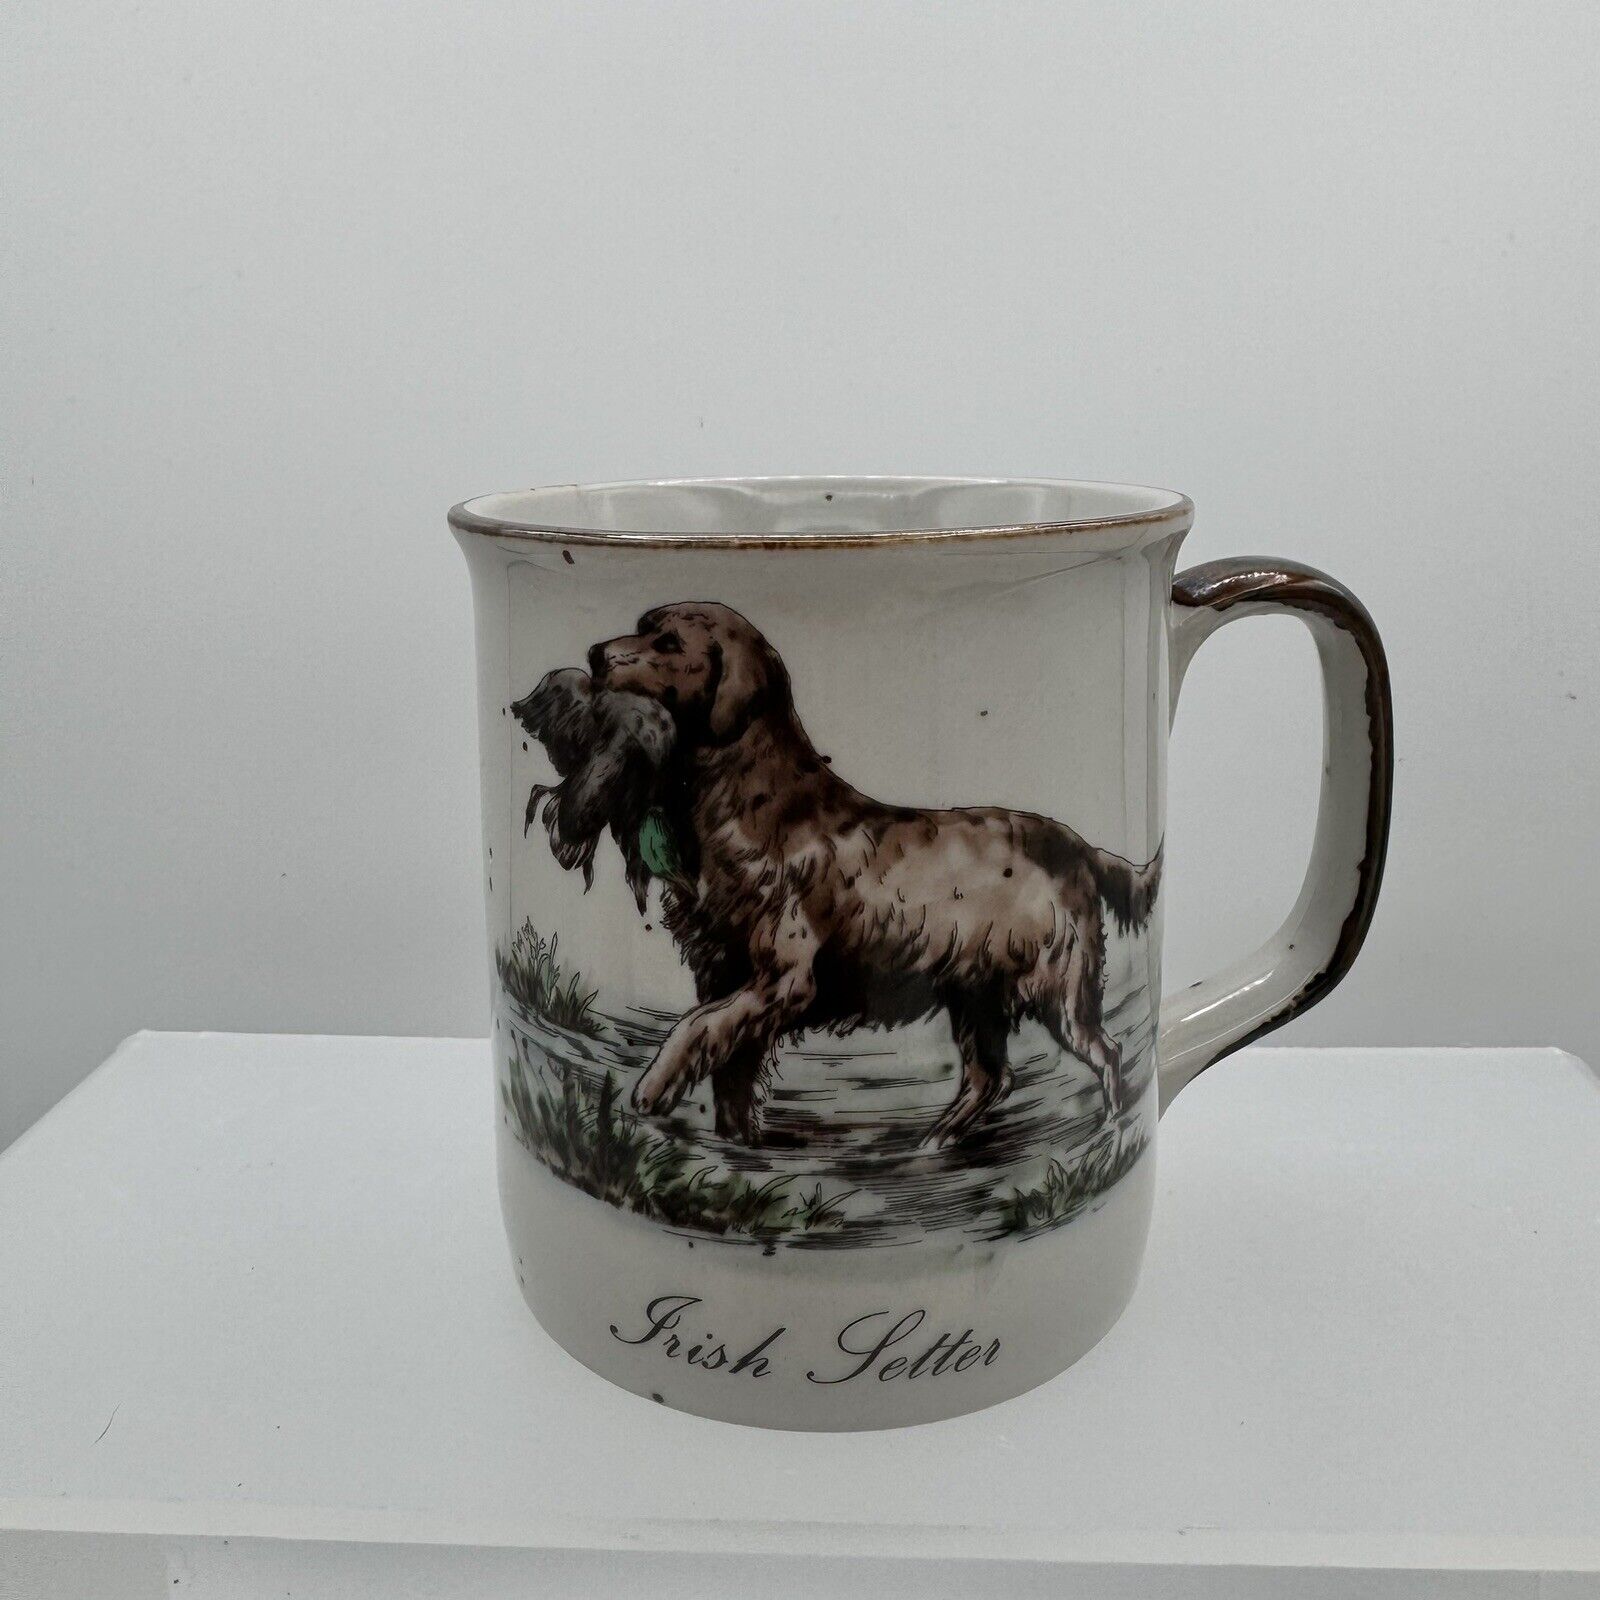 Vintage Speckled Pottery Mug Cup Irish Setter Dog EUC great Gift Idea